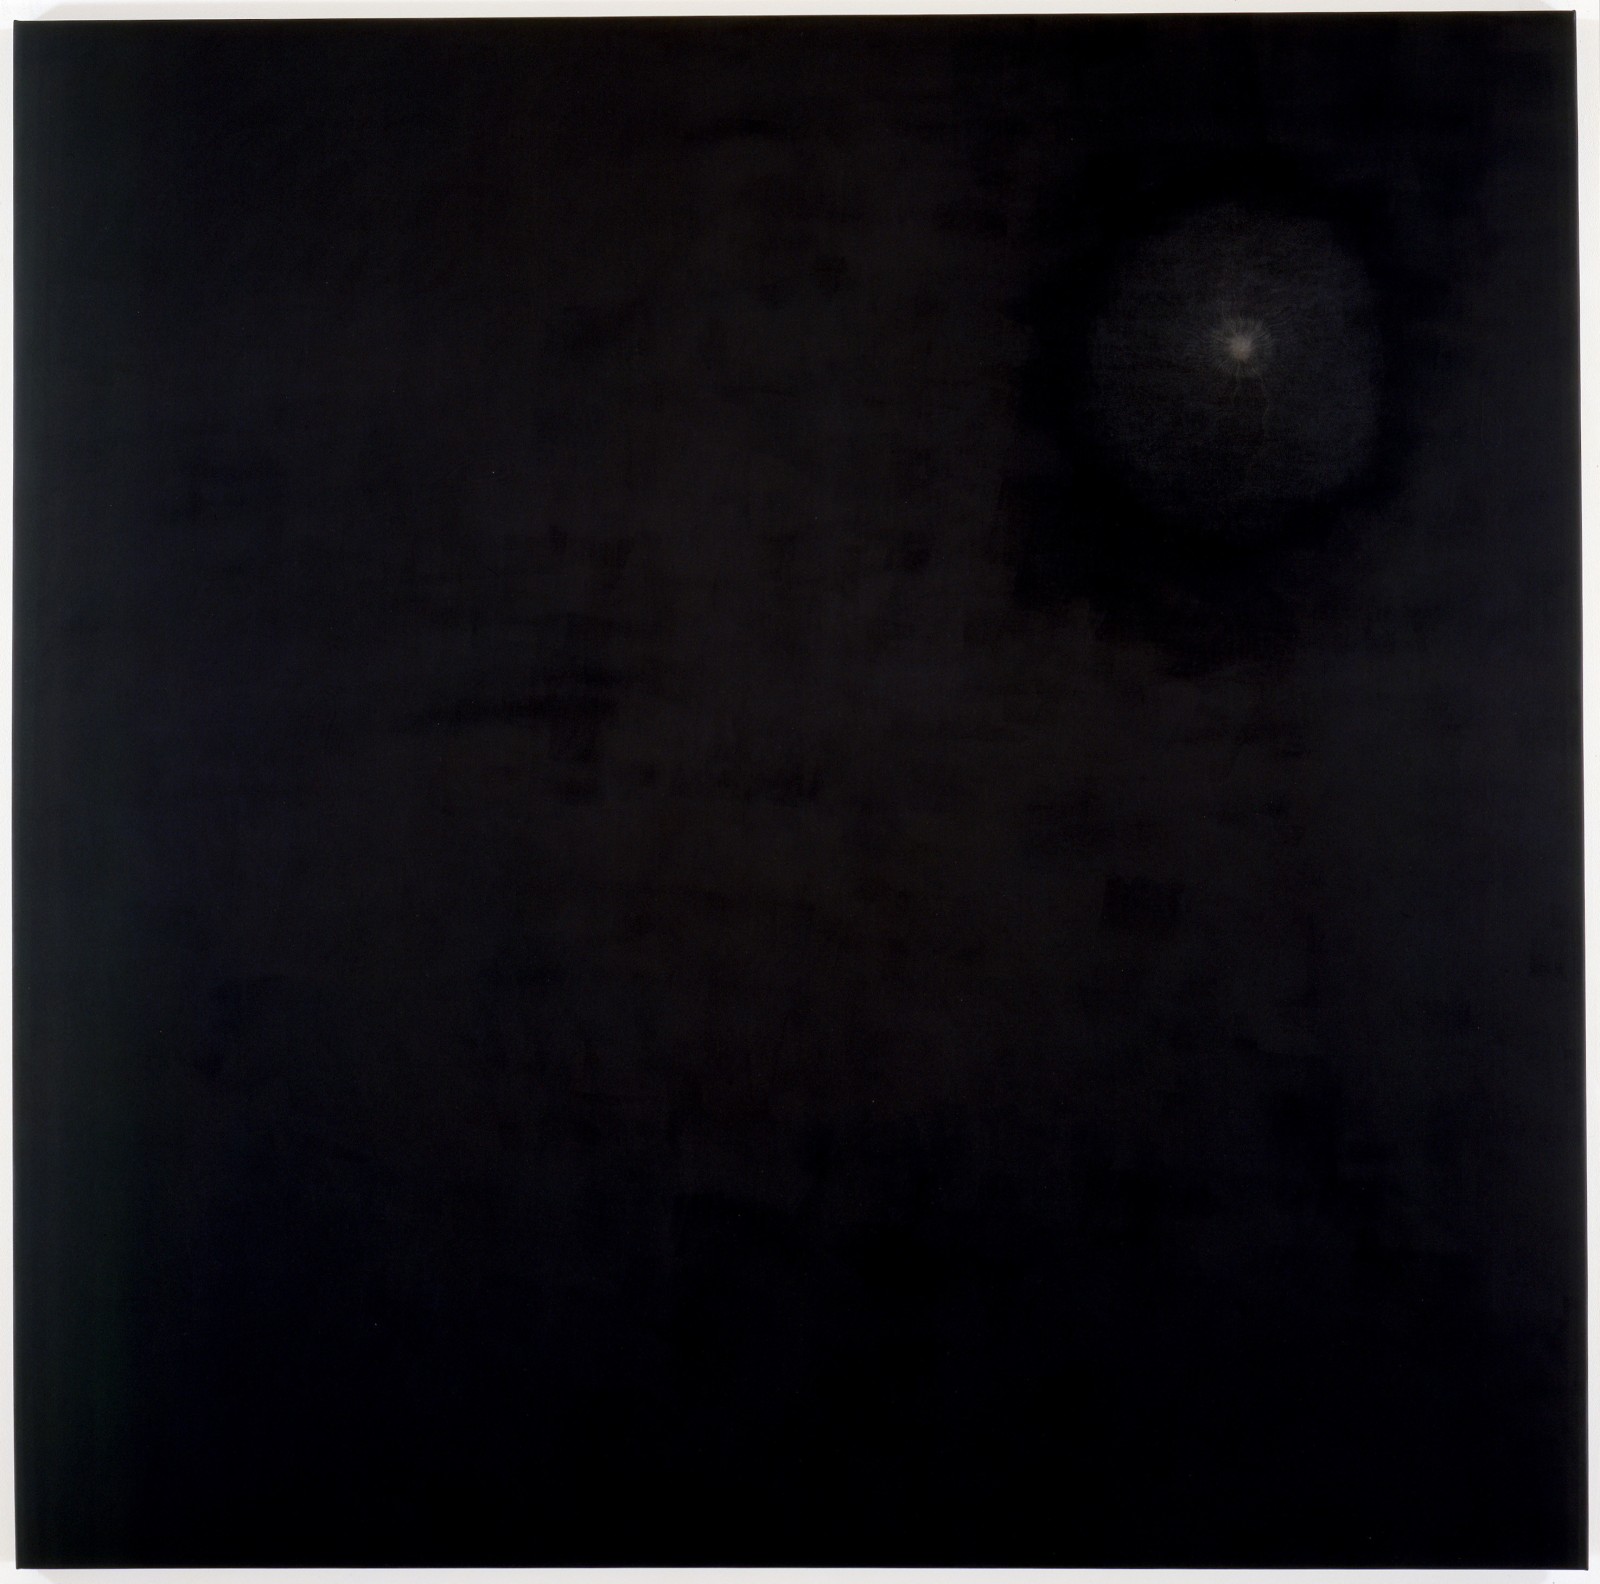 SHIRAZEH HOUSHIARY, Black light, 1998